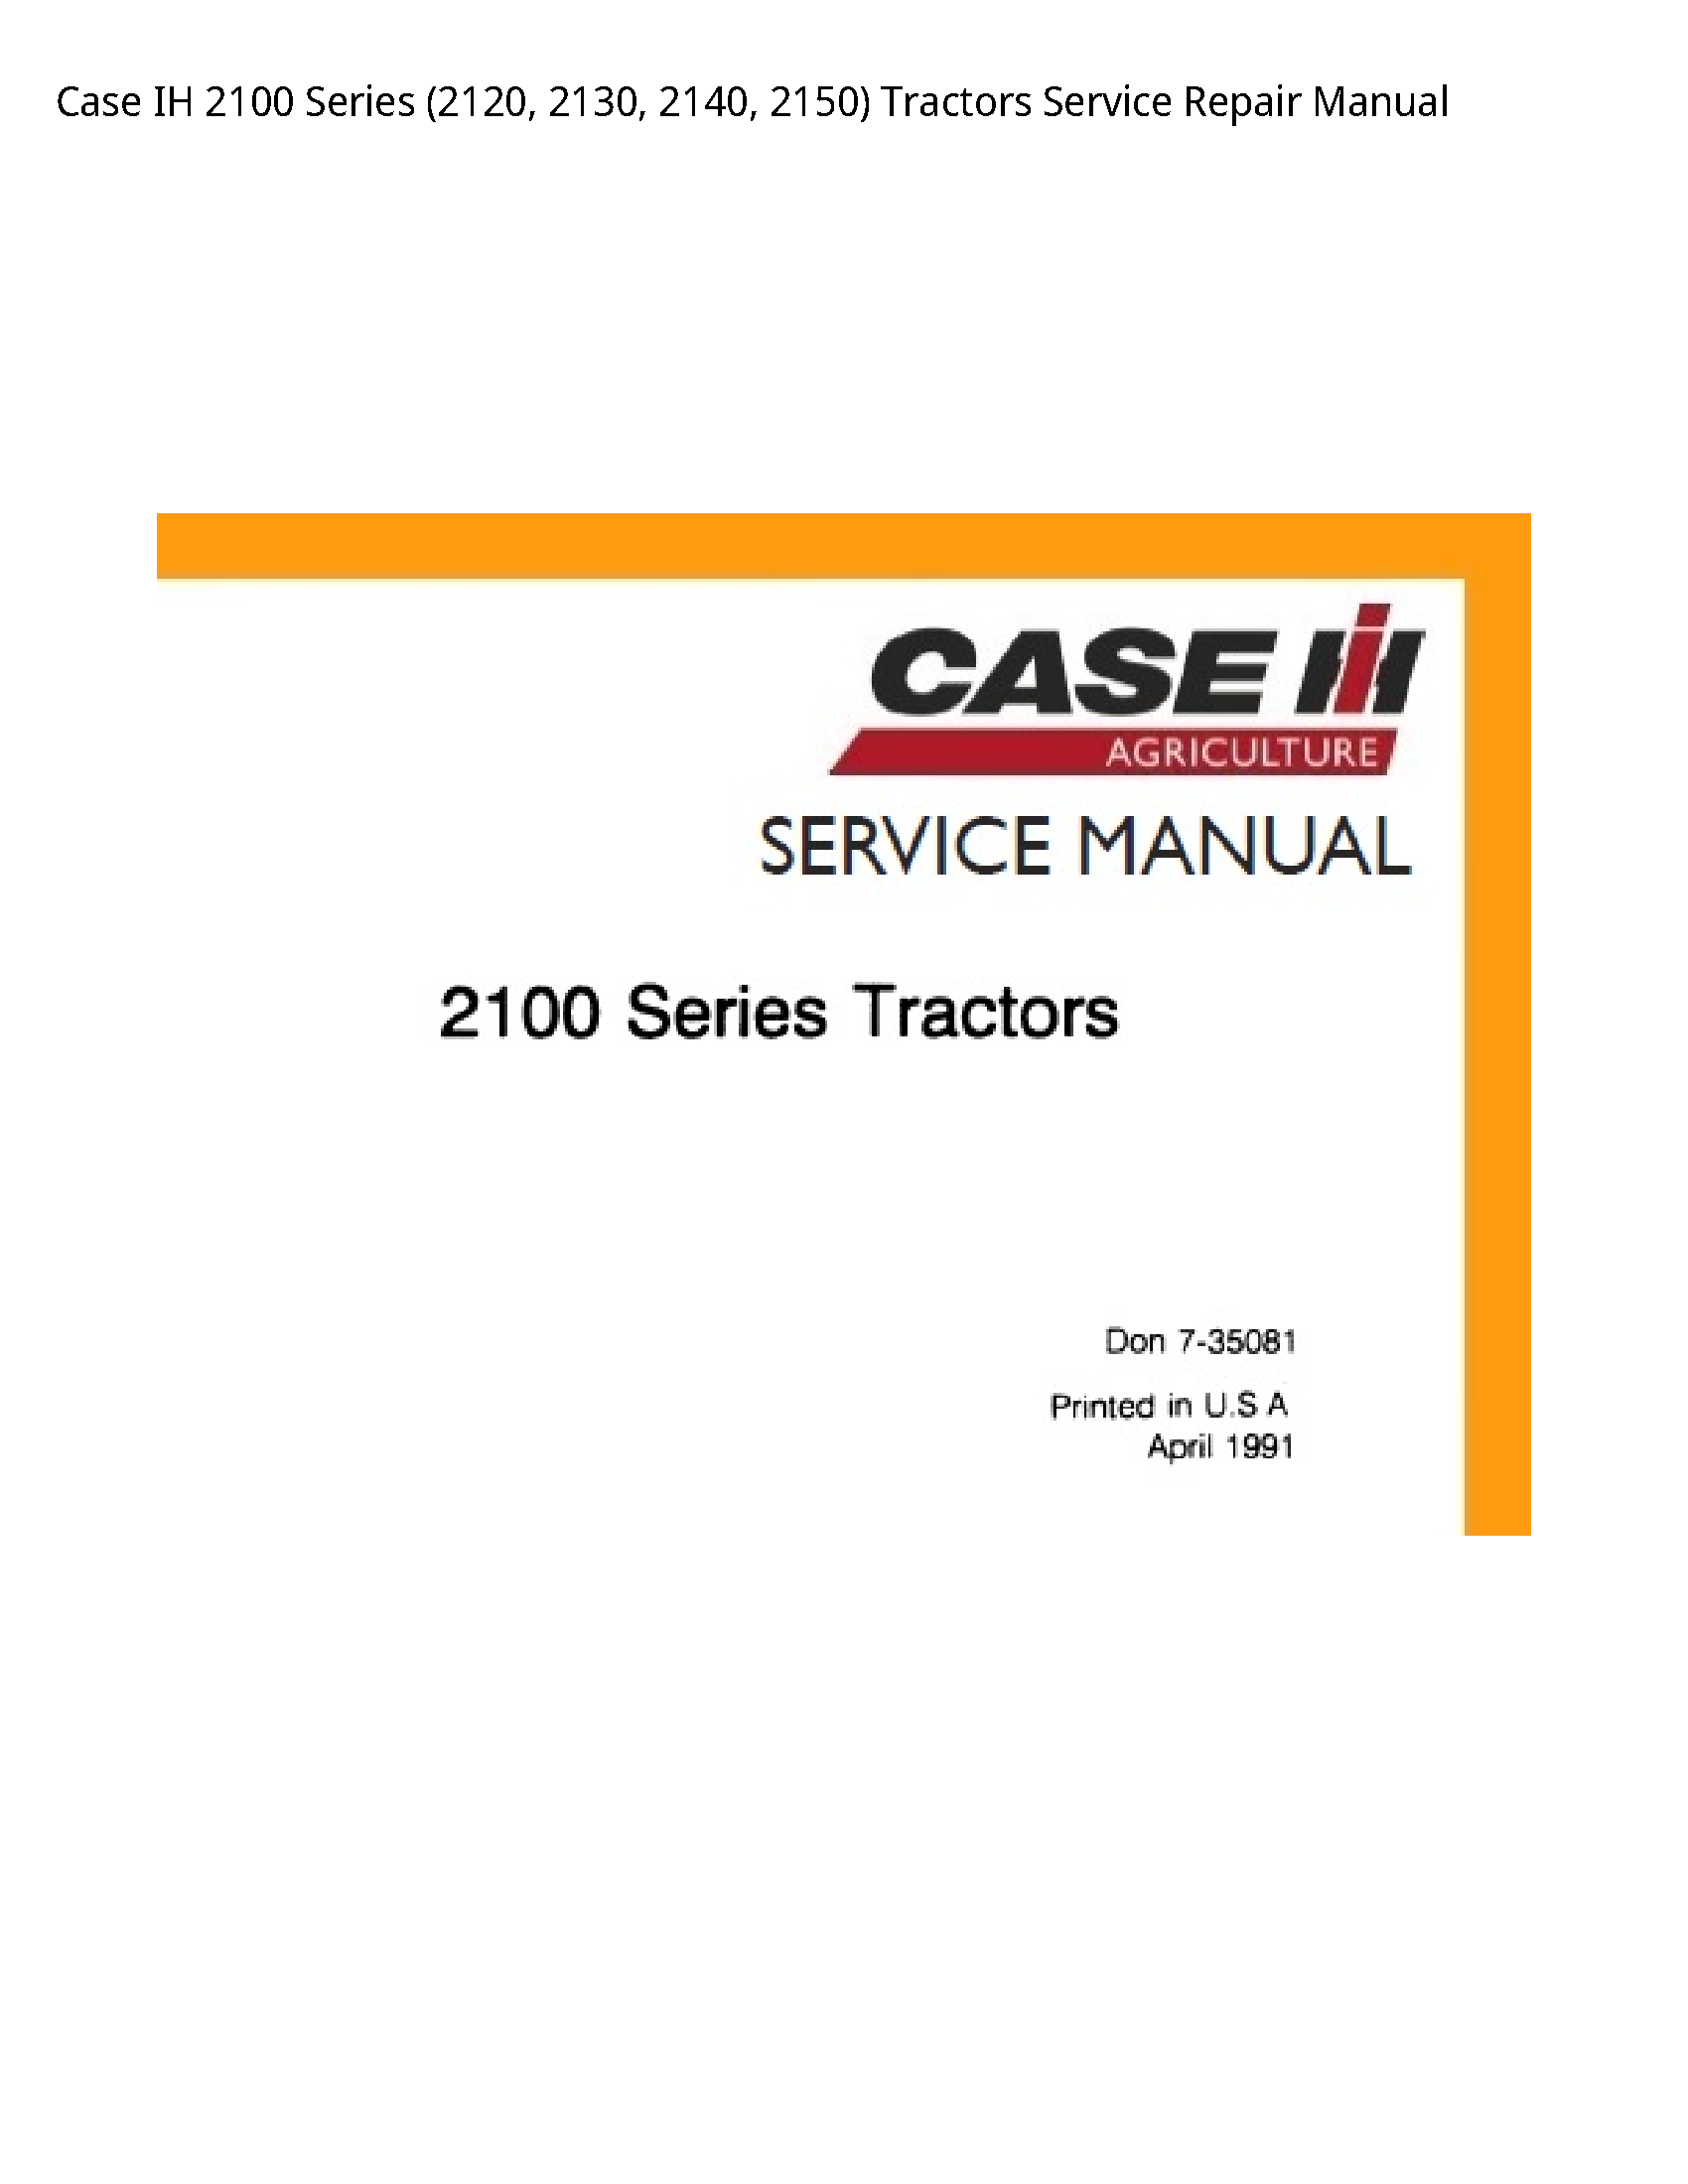 Case/Case IH 2100 IH Series Tractors manual